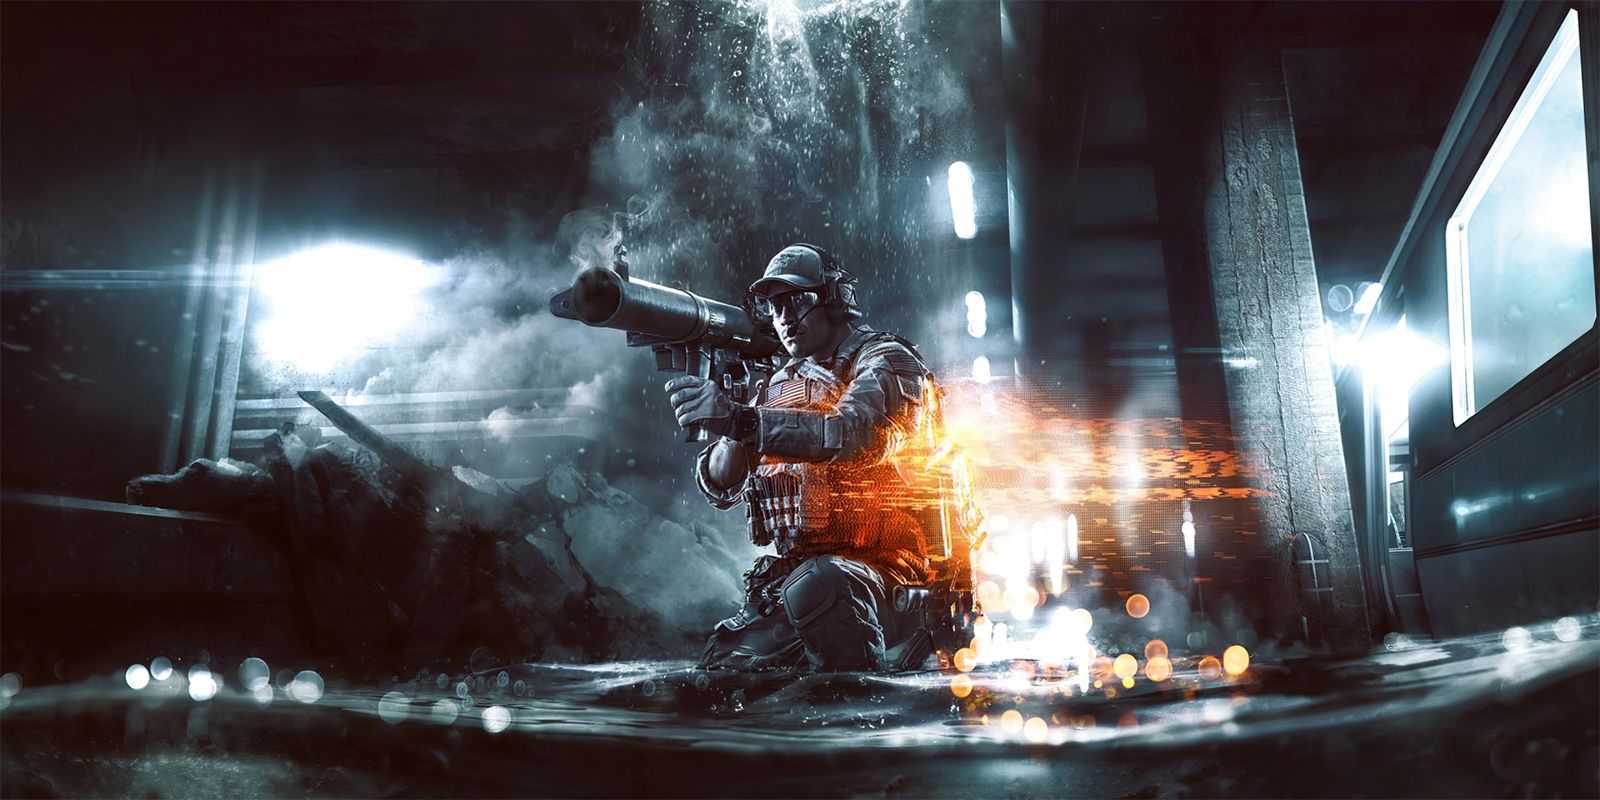 Battlefield 4 Is FREE To Own Via  Prime Gaming Ahead of Battlefield 6  Reveal